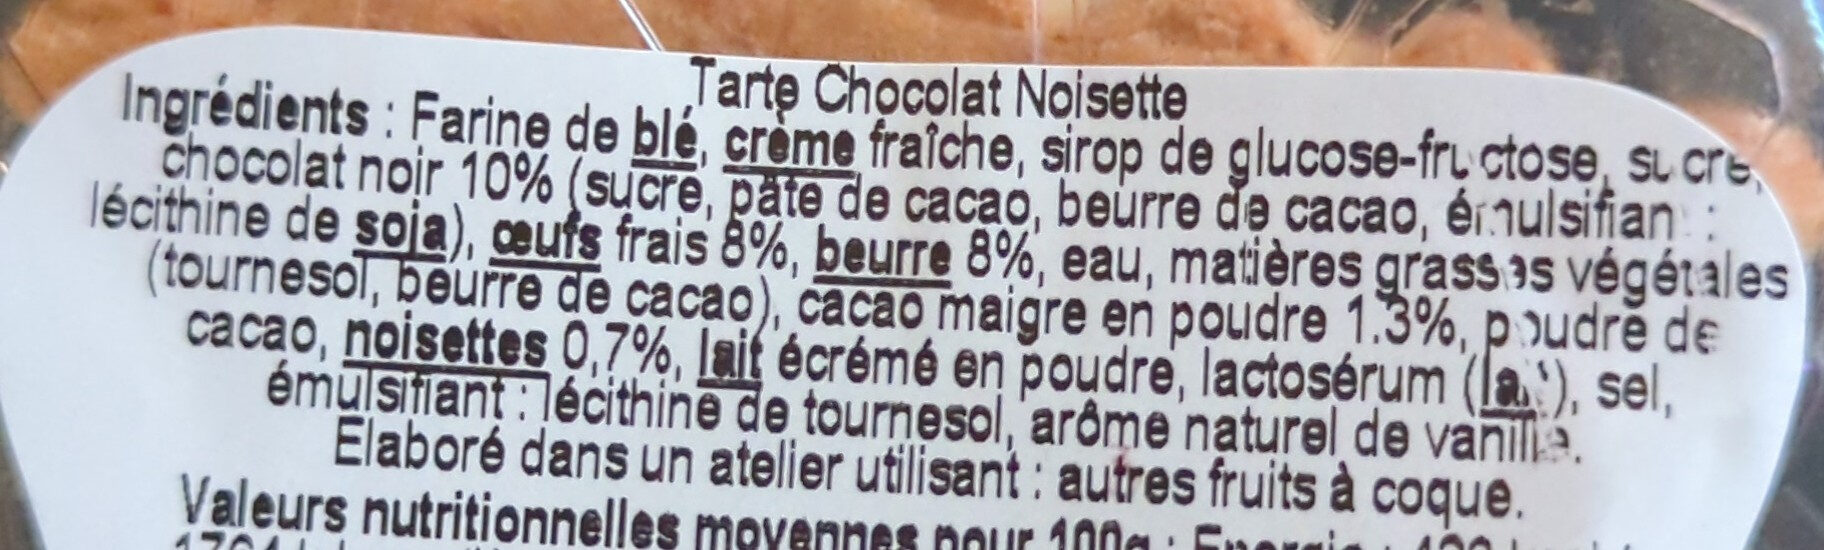 Tarte chococolat noisette - Ingredients - fr